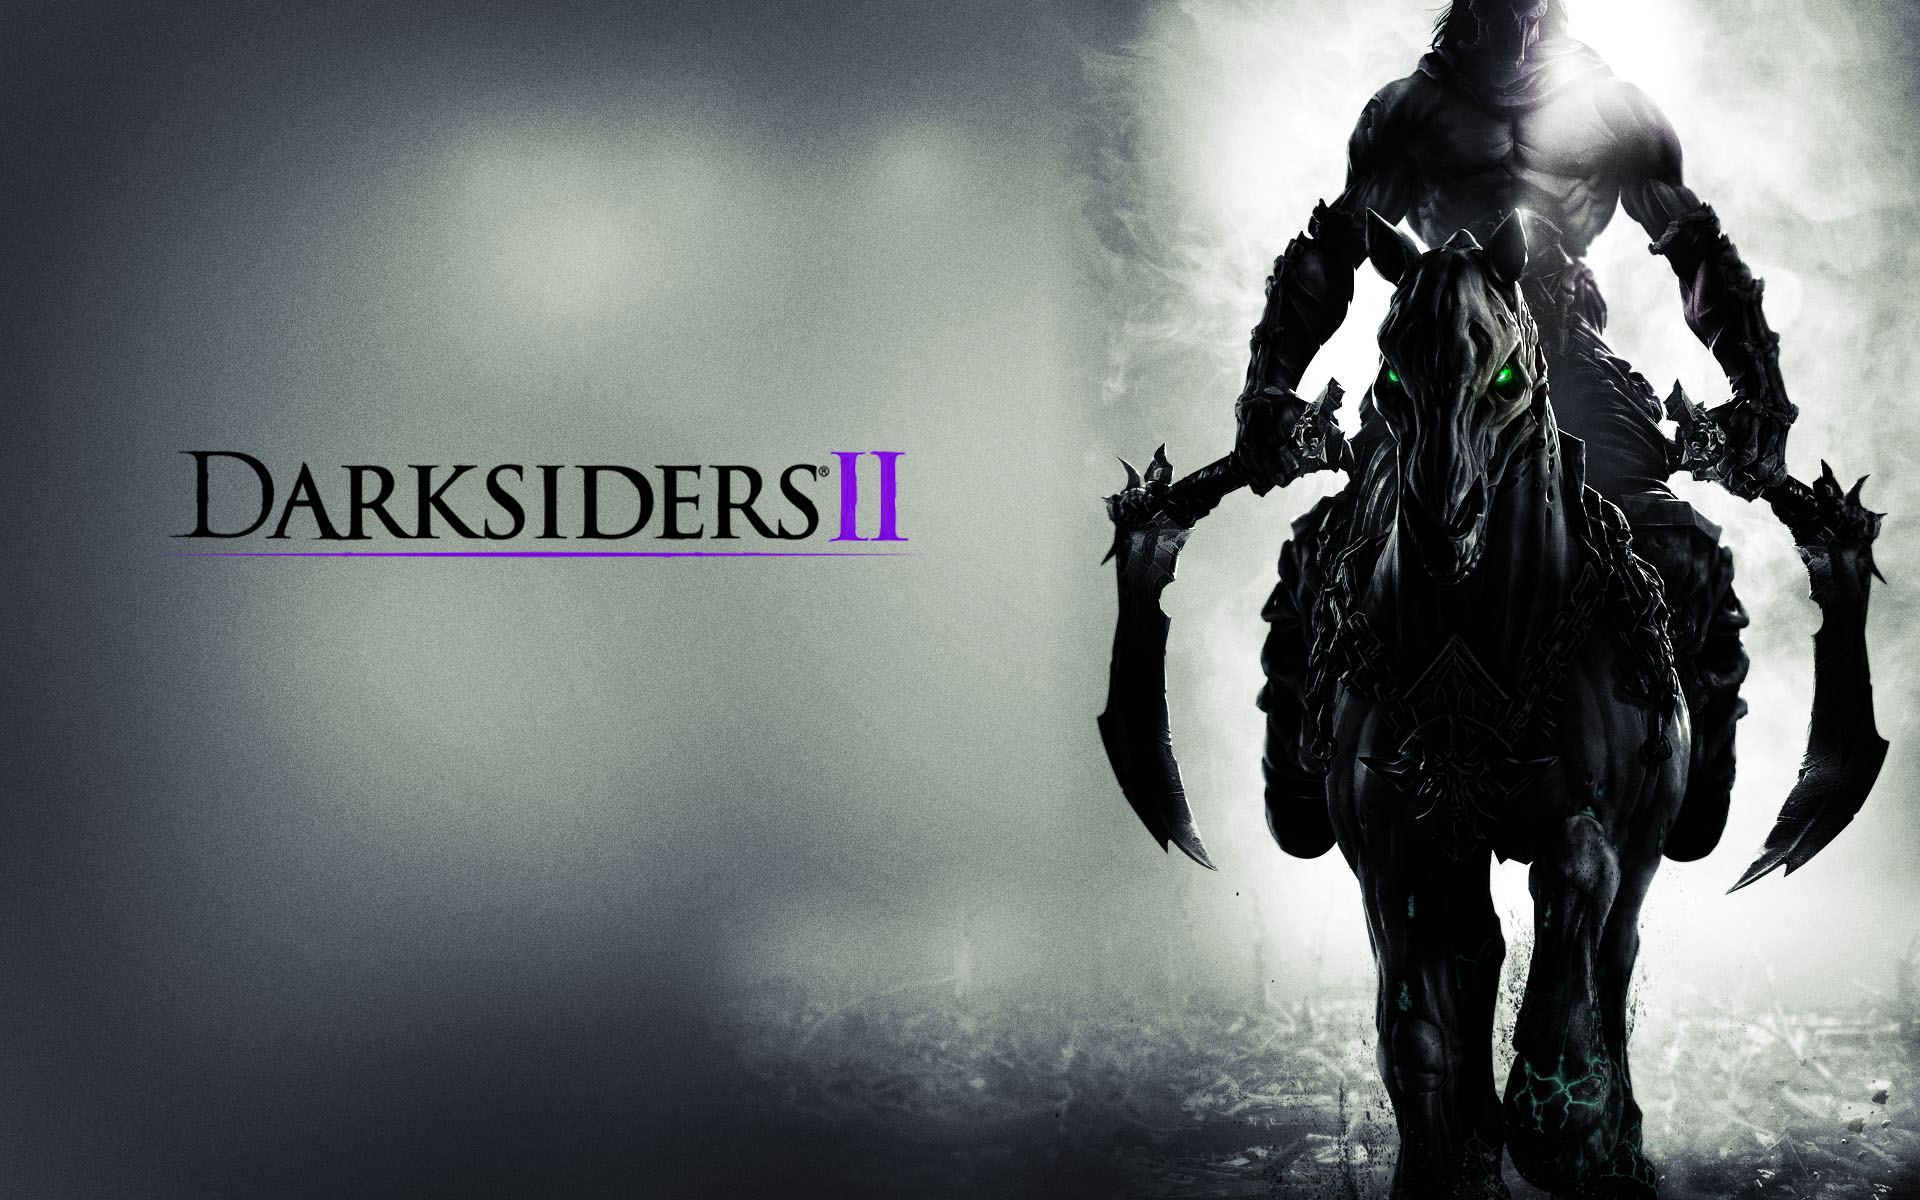 Darksiders 2 2012 - Wallpaper, High Definition, High Quality, Widescreen
